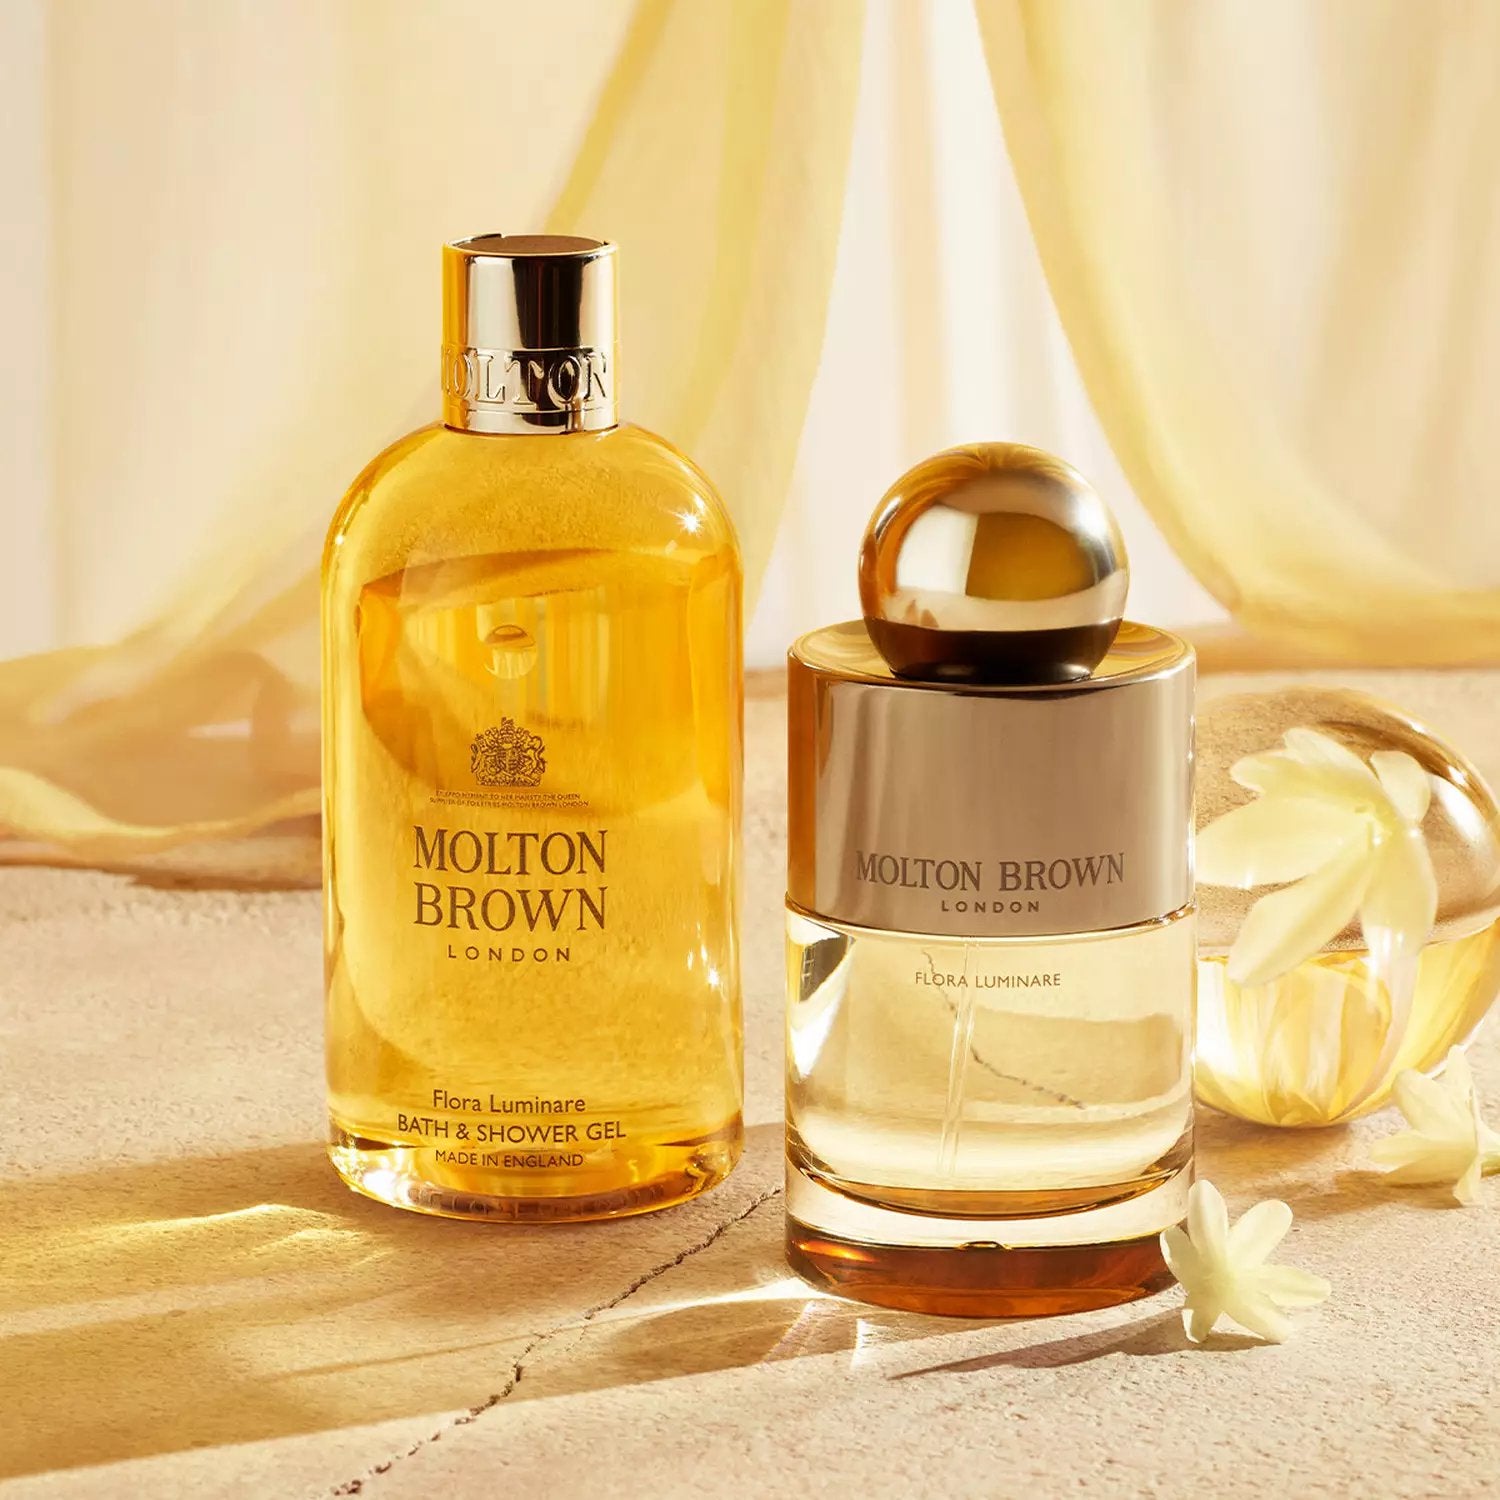 Molton Brown Flora Luminare Bath & Shower Gel